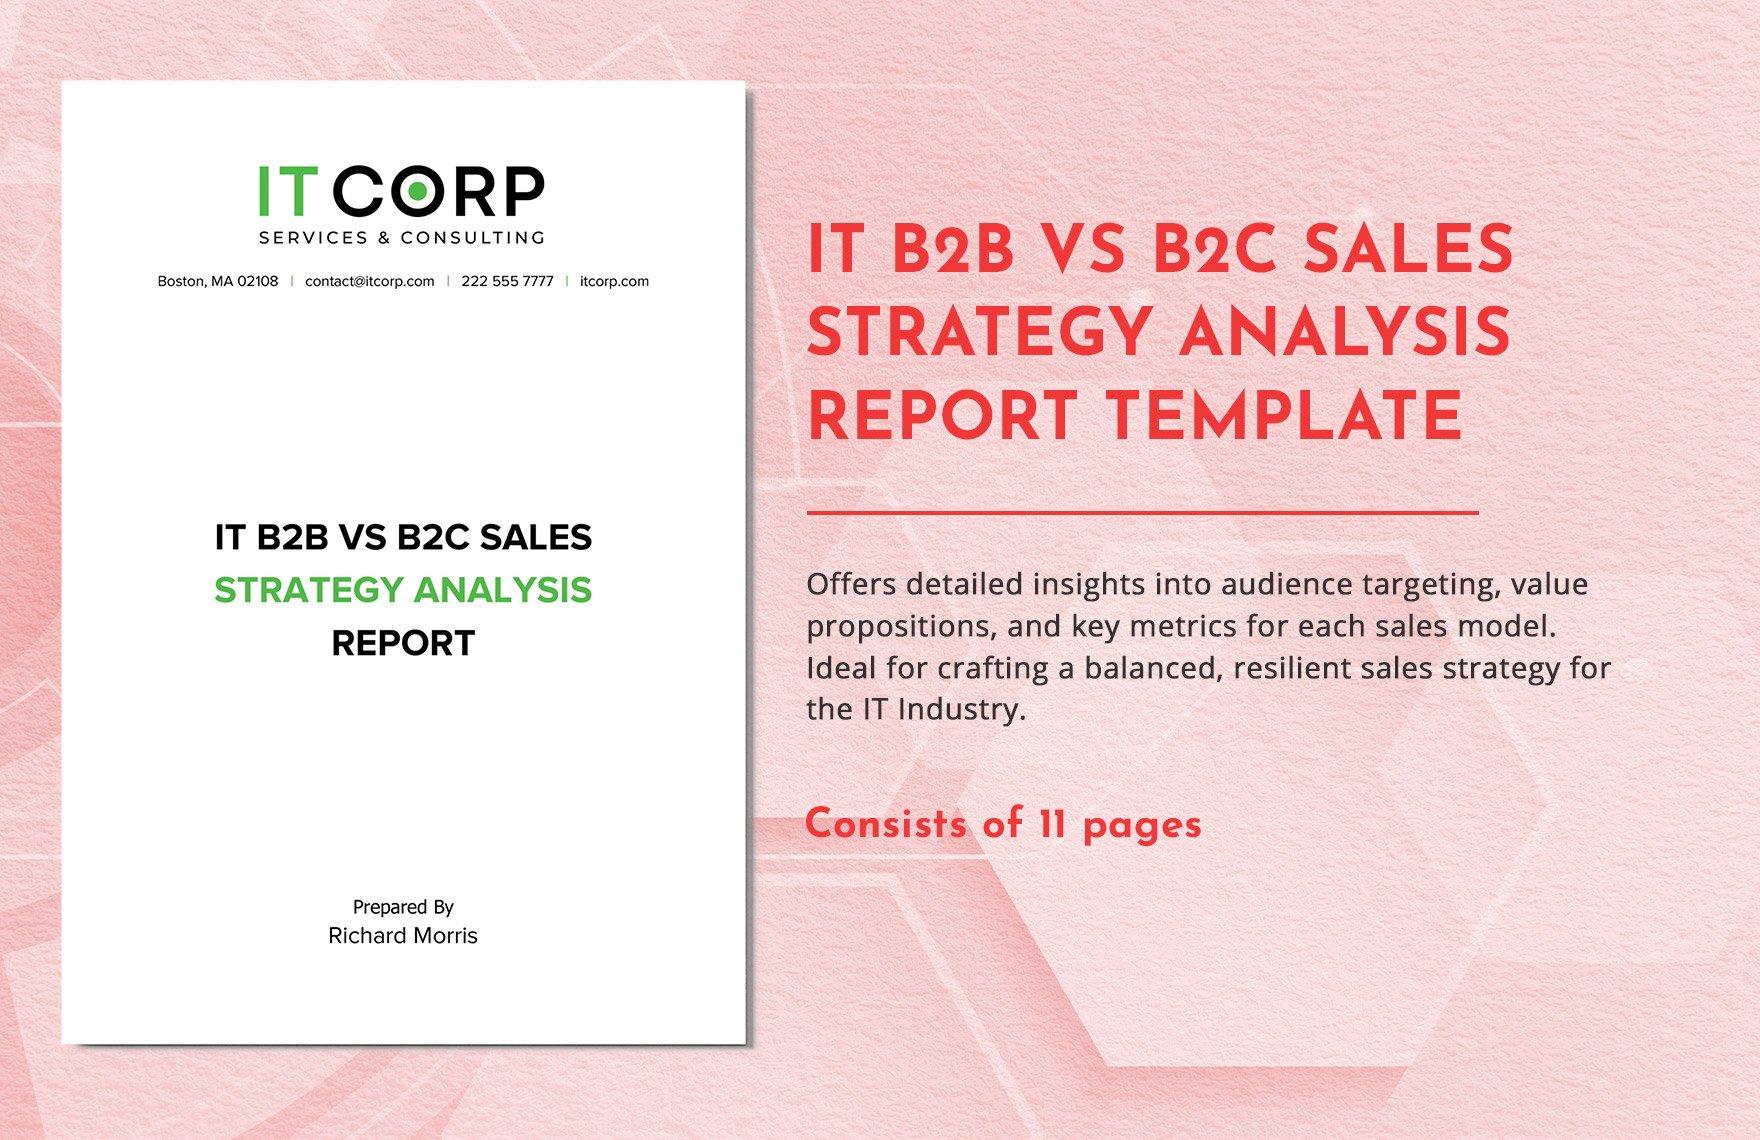 IT B2B vs B2C Sales Strategy Analysis Report Template